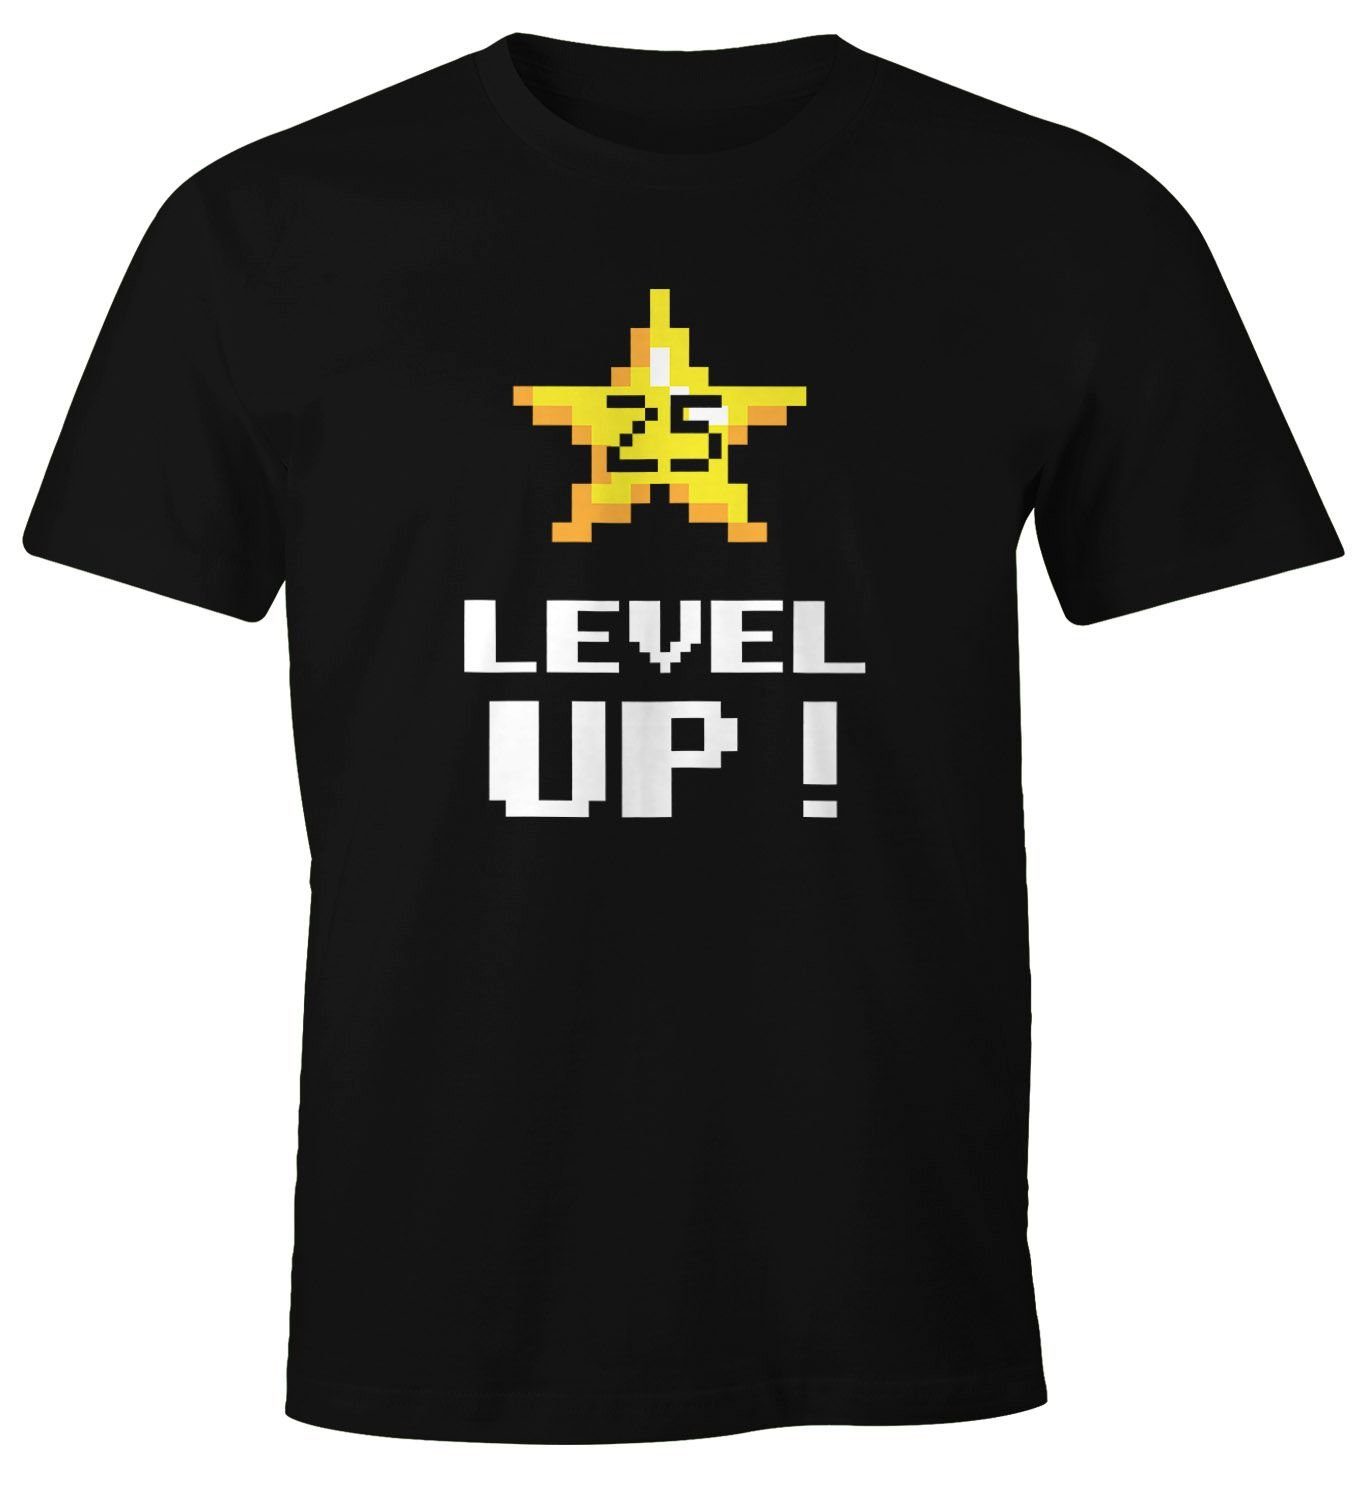 Fun-Shirt Print-Shirt Up 25 mit Herren Gamer Pixel-Stern schwarz Moonworks® Pixelgrafik T-Shirt Geschenk Geburtstag Print Arcade Retro Level MoonWorks